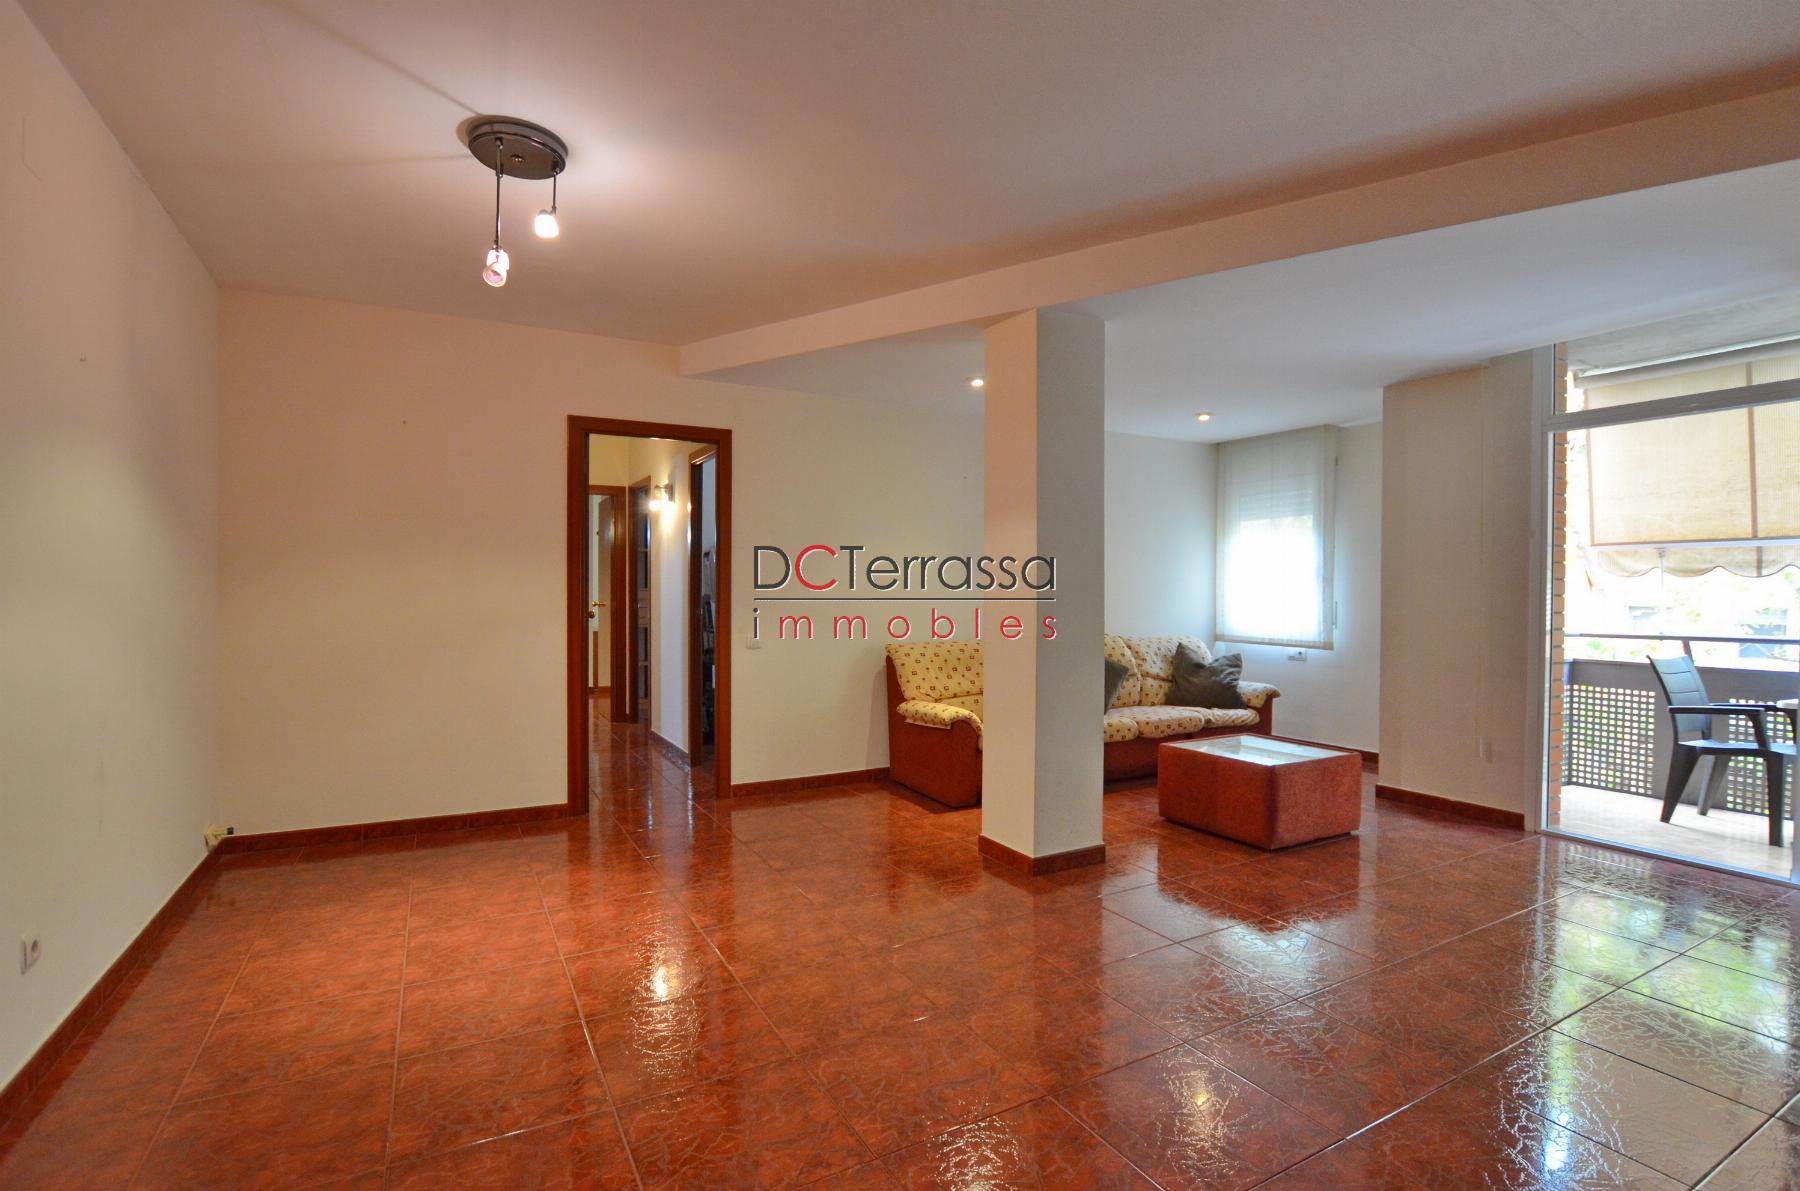 For sale of flat in Terrassa